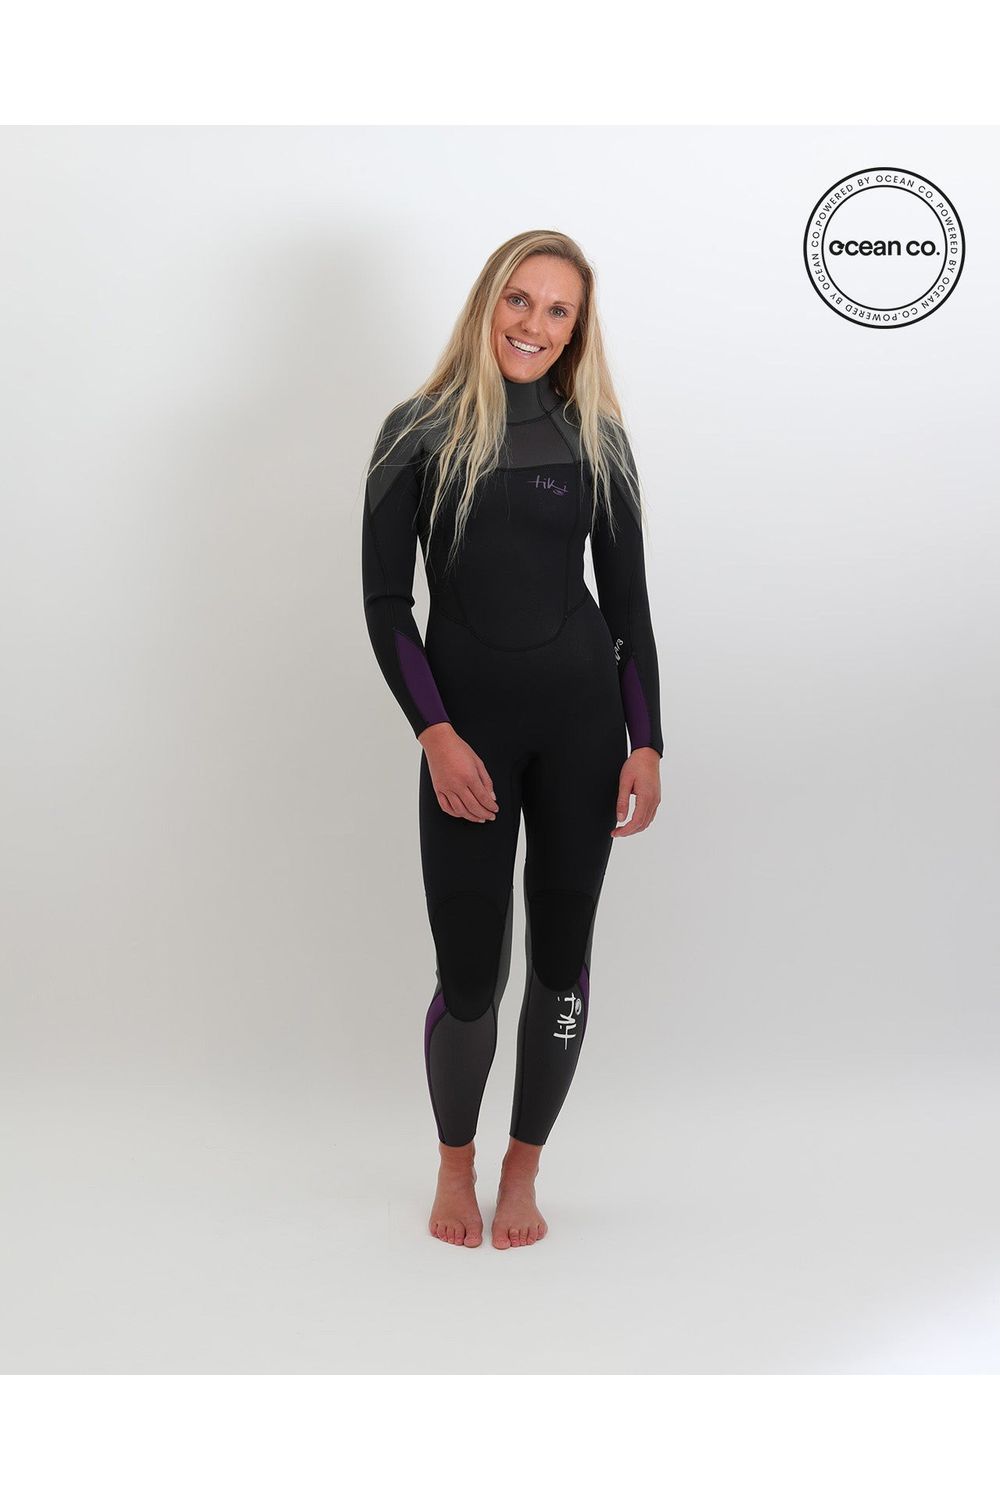 Tiki Ladies Tech 4/3 Wetsuit GBS - Back Zip - Black/Mulberry